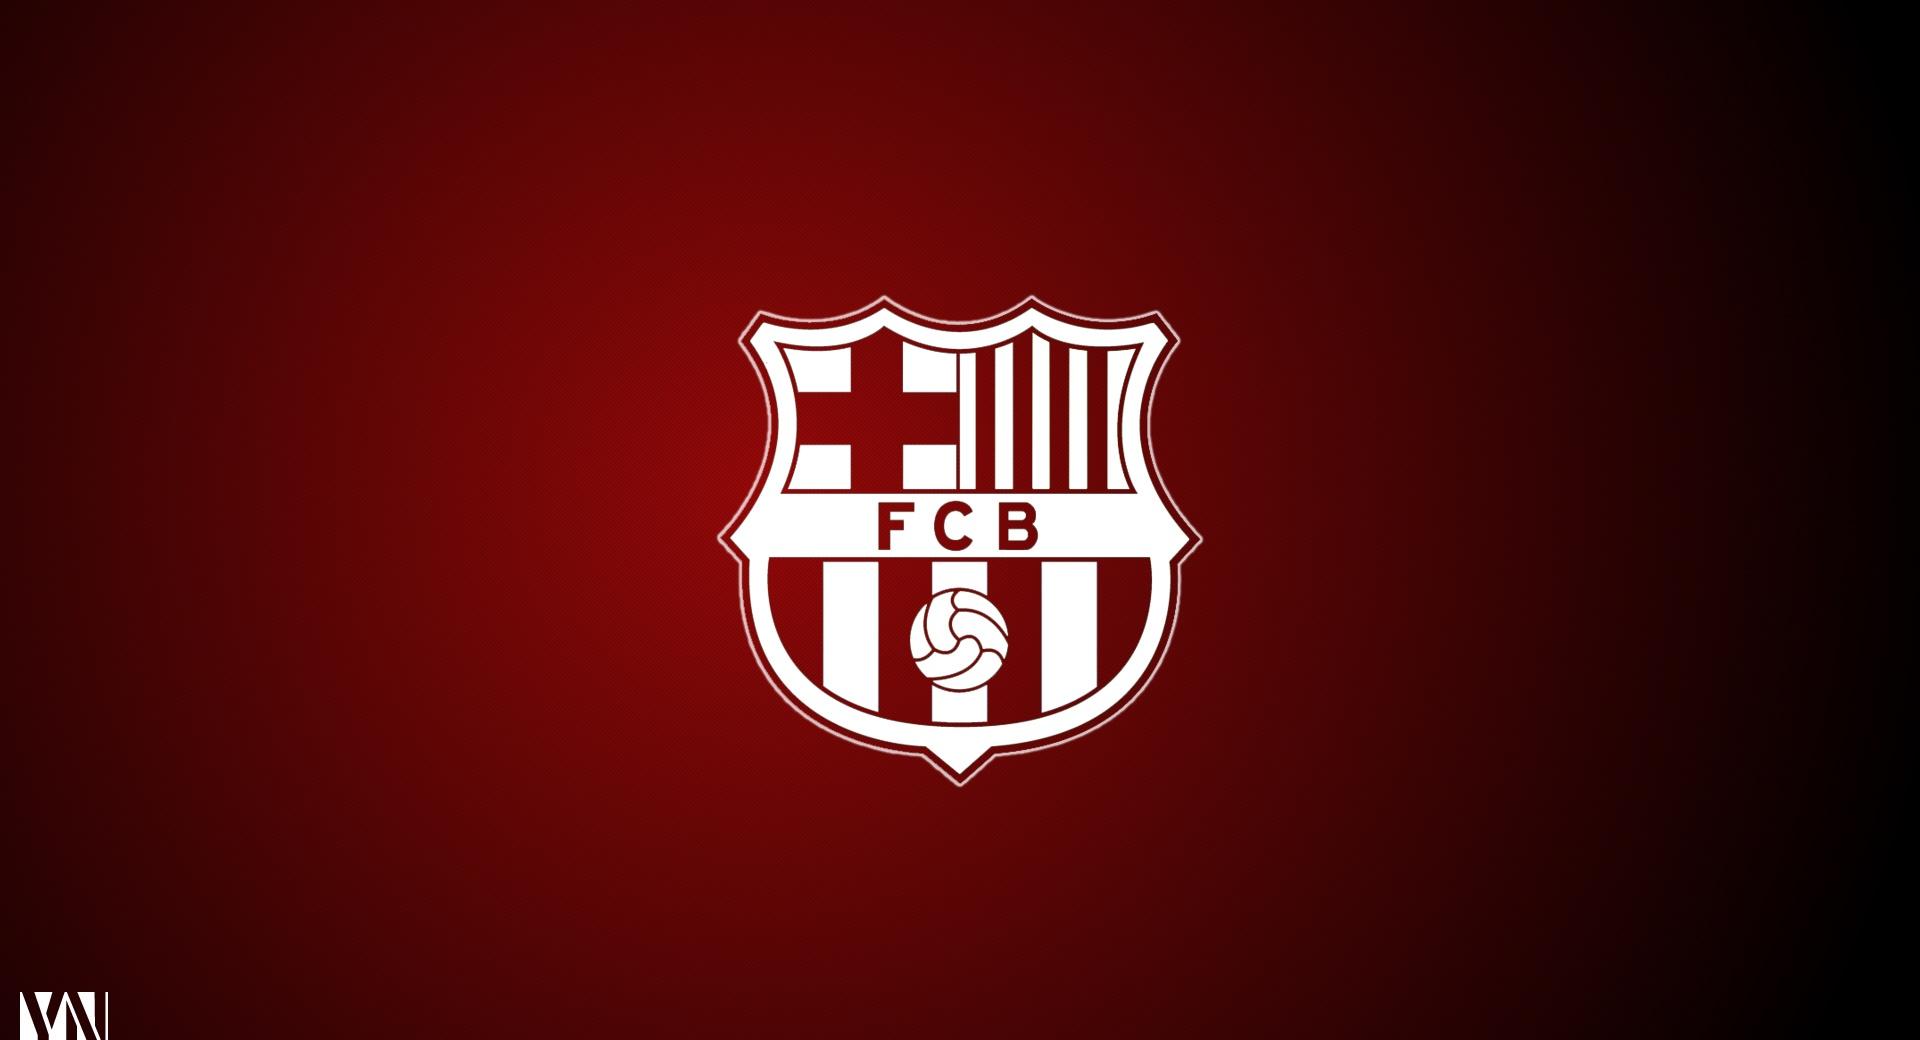 FC Barcelona by Yakub Nihat at 1024 x 1024 iPad size wallpapers HD quality